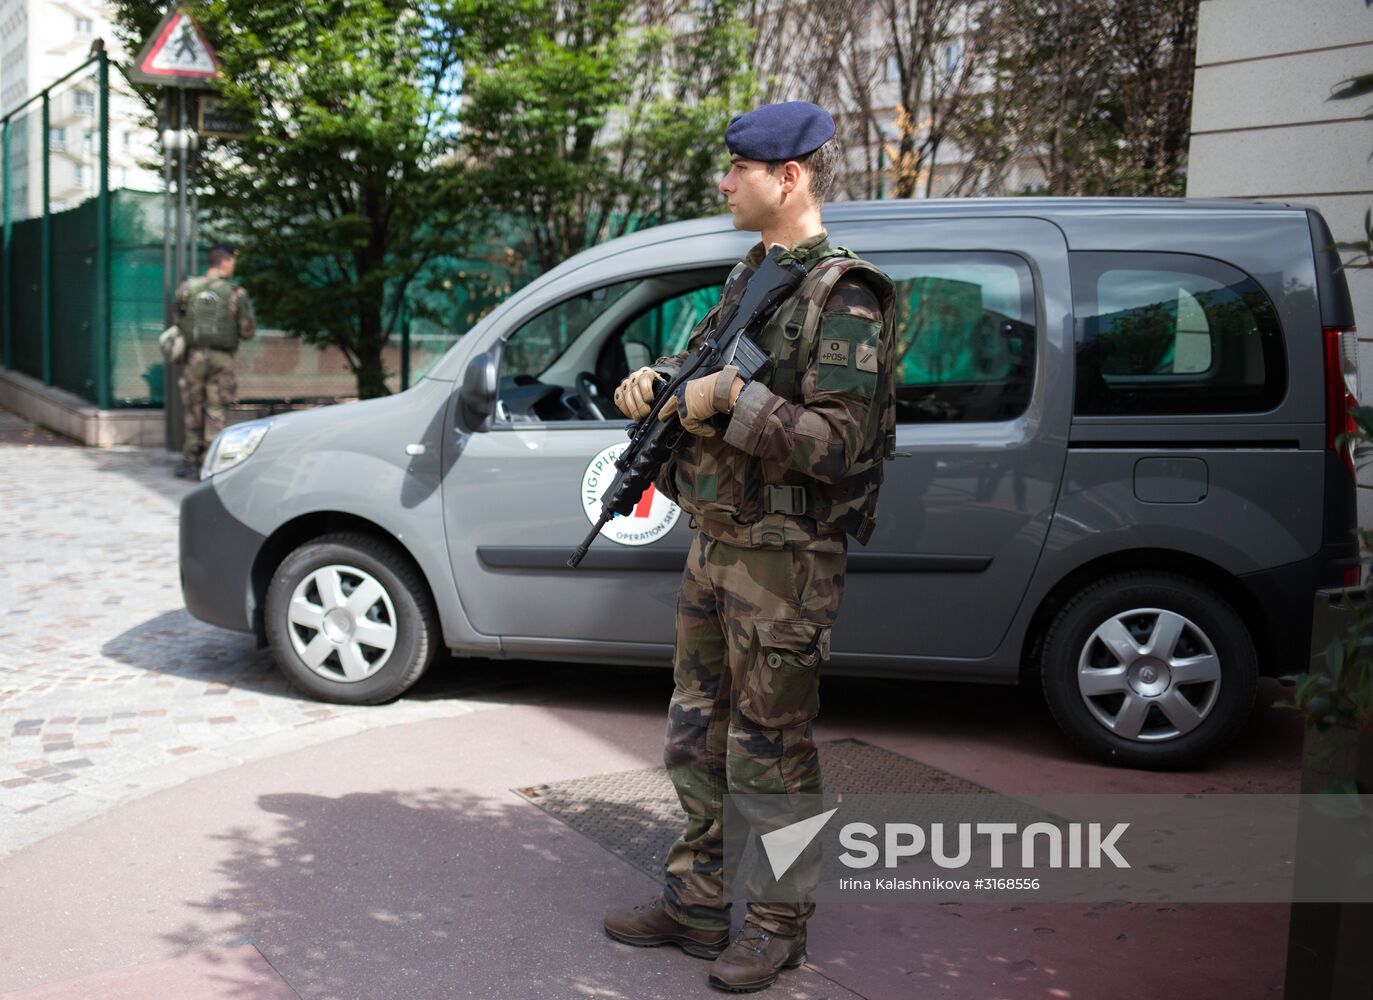 Car plows through soldiers on patrol in Paris suburb